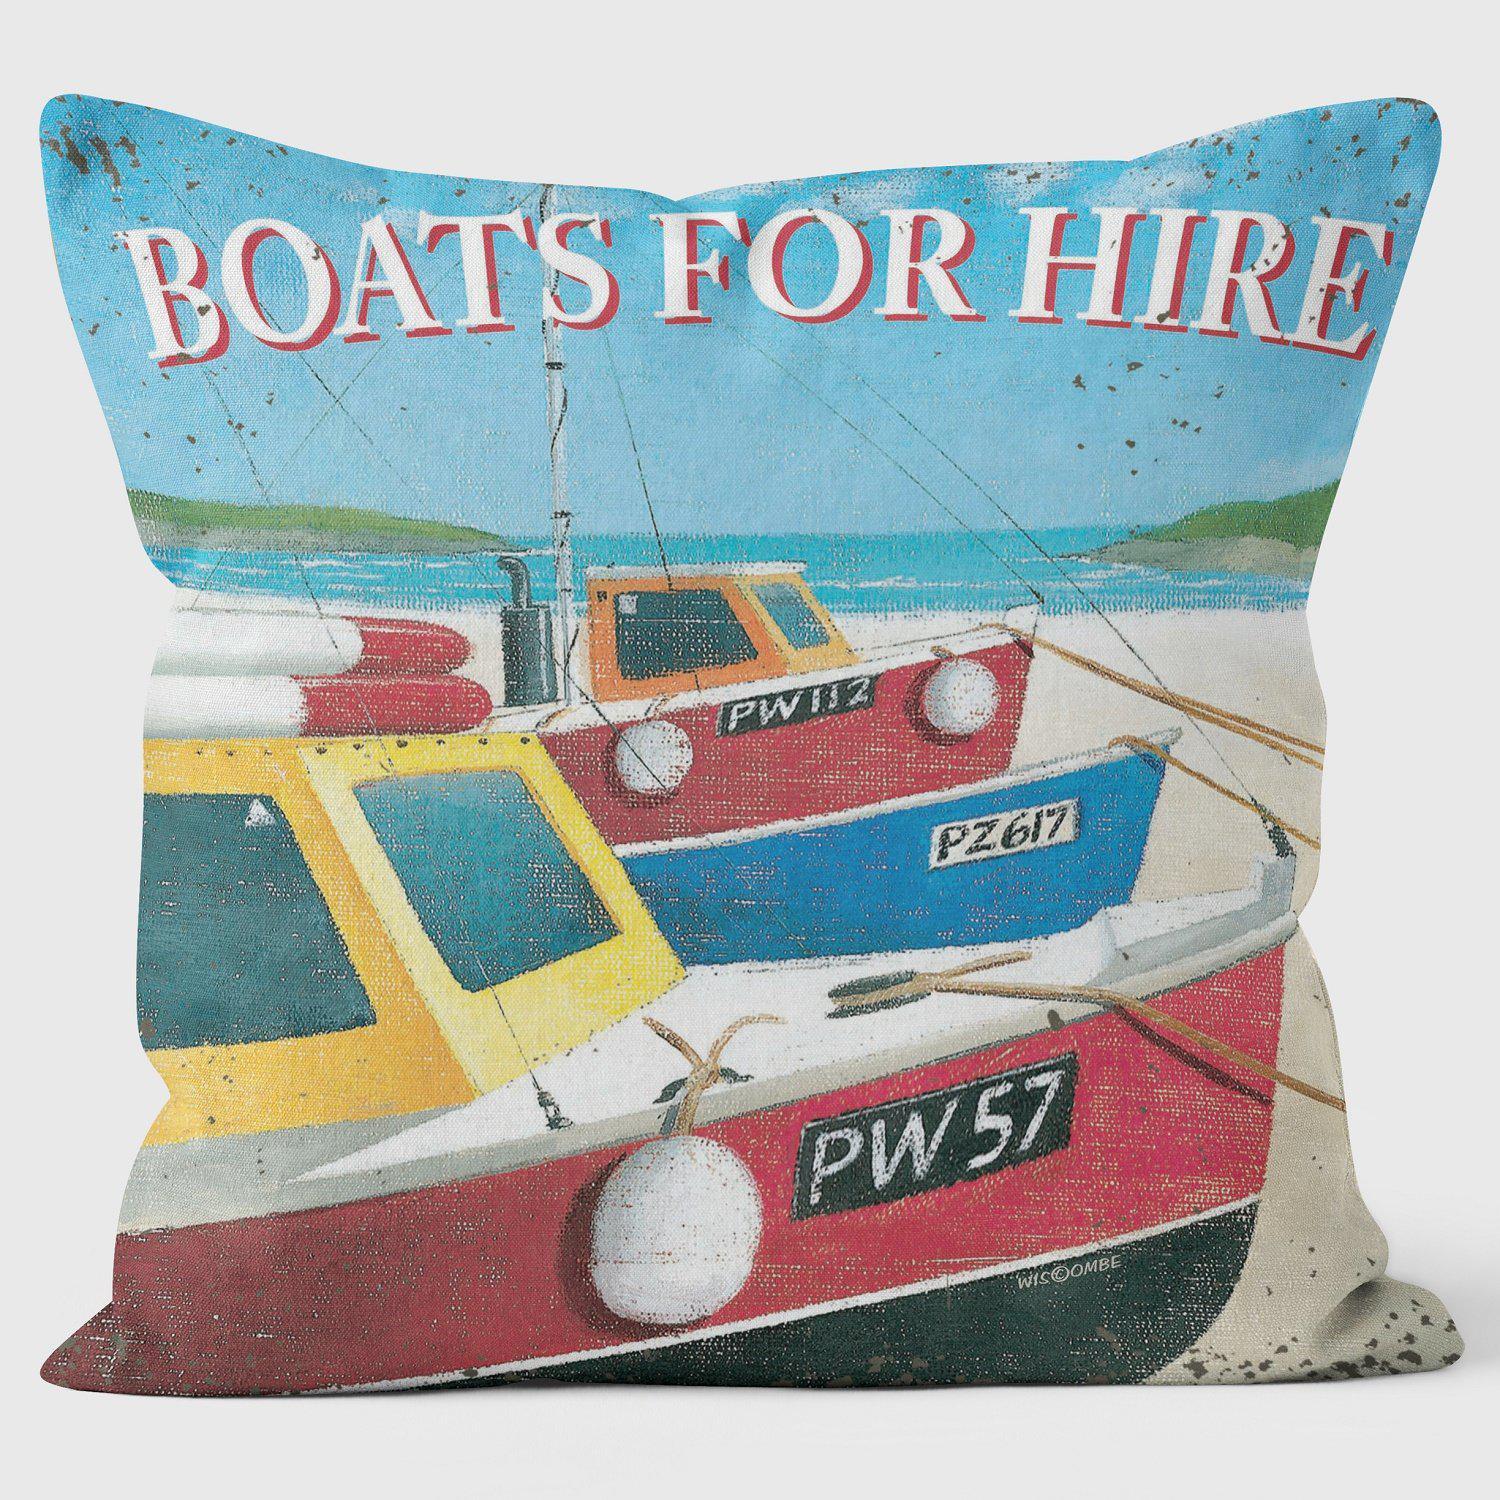 Boats For Hire - Martin Wiscombe - Art Print Cushion - Handmade Cushions UK - WeLoveCushions